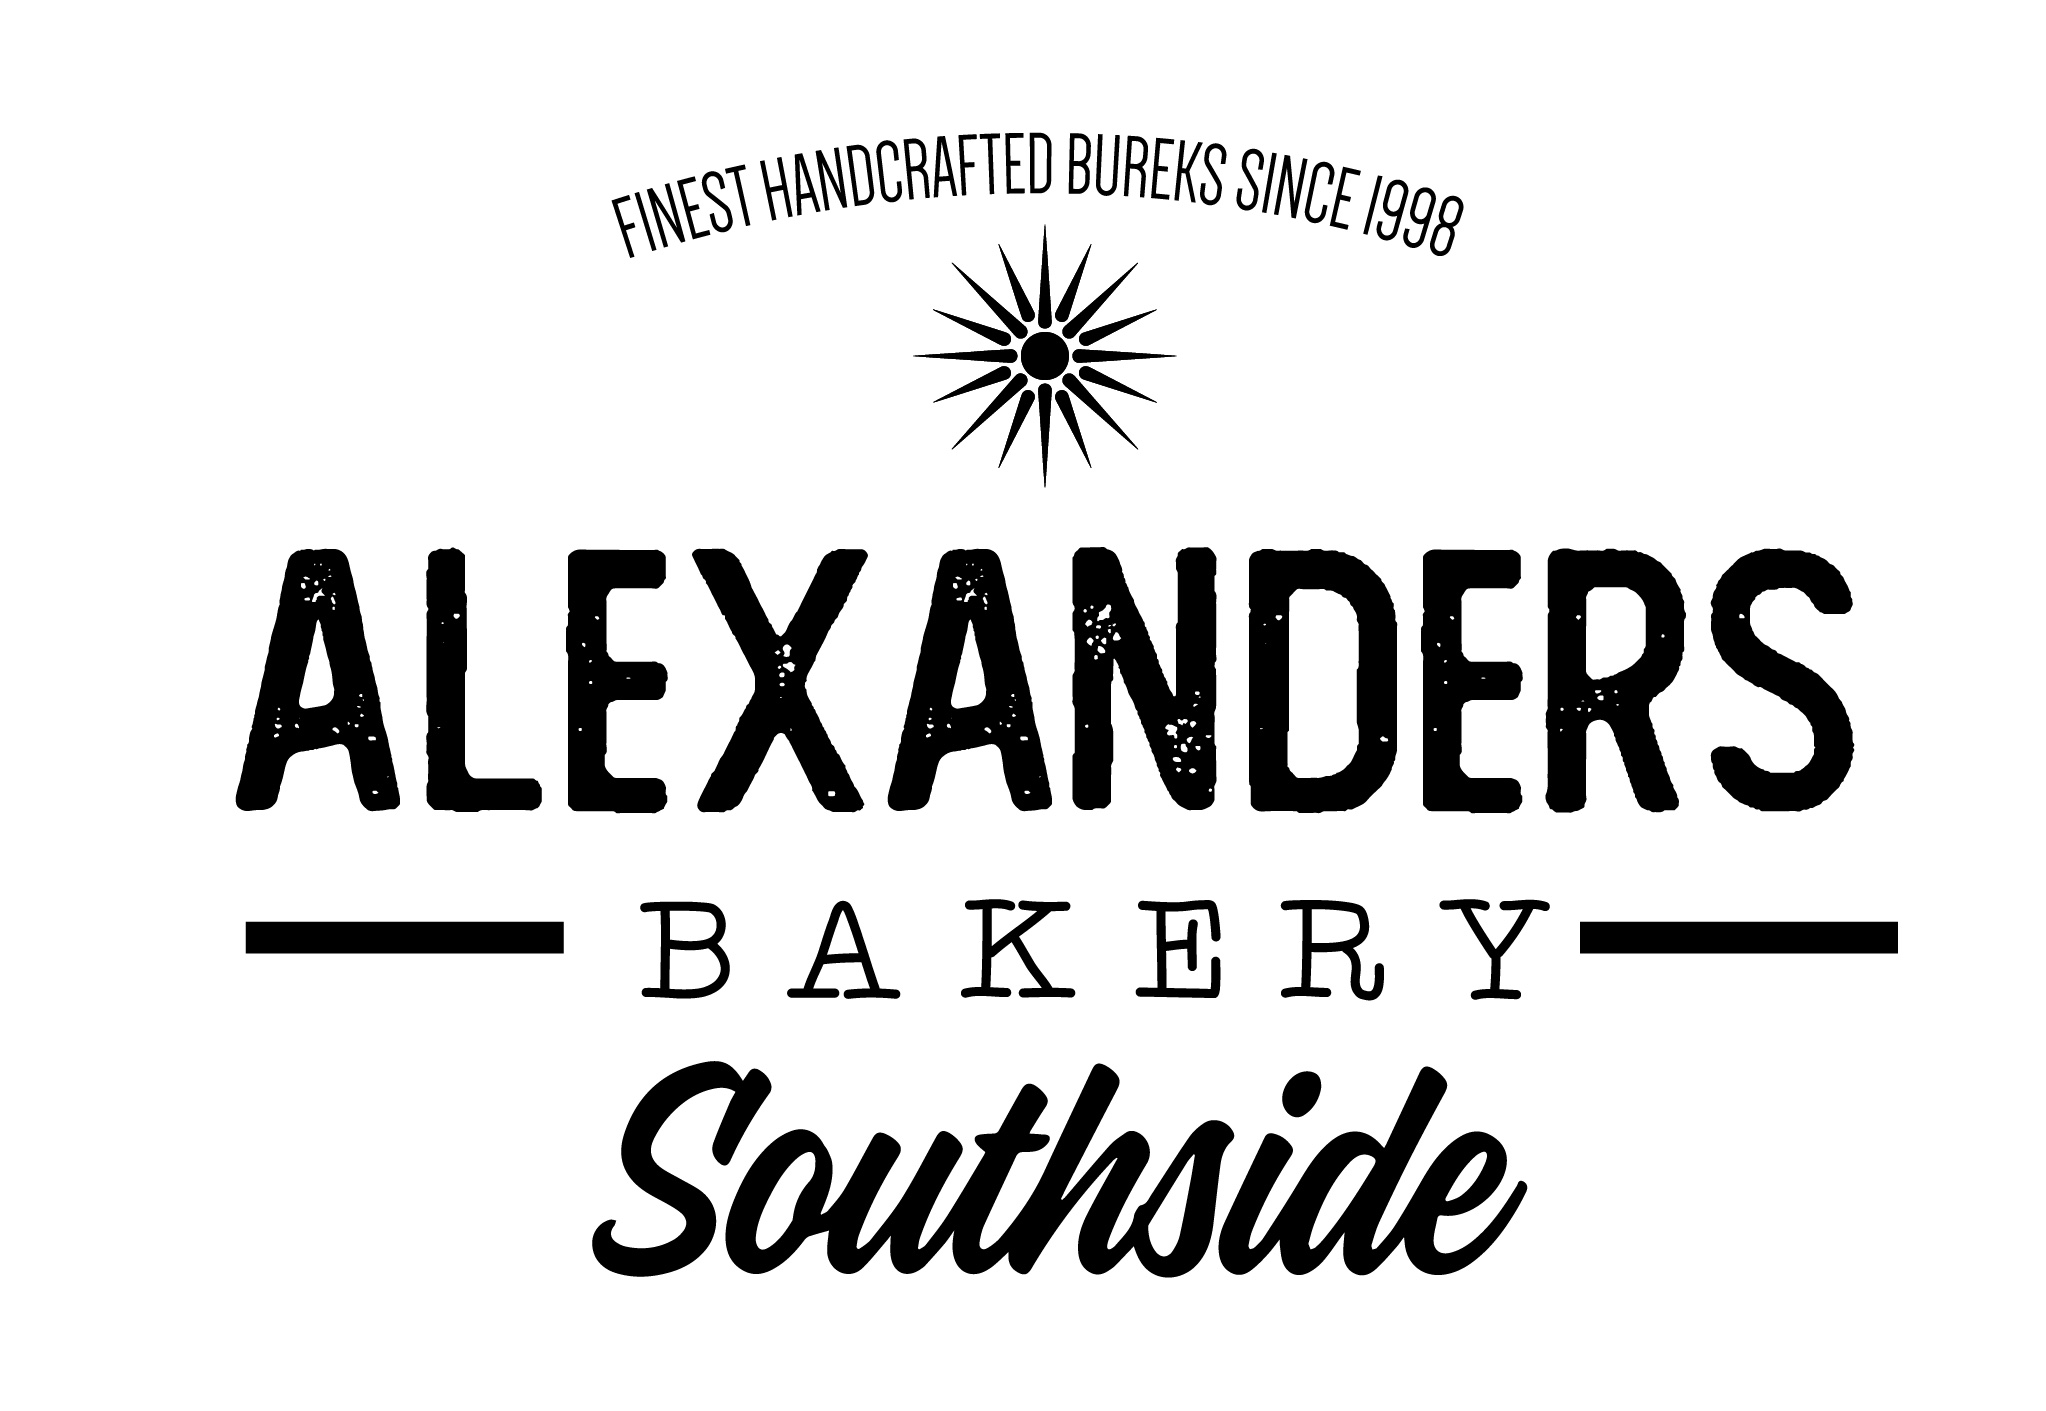 Alexander’s Bakery Southside logo